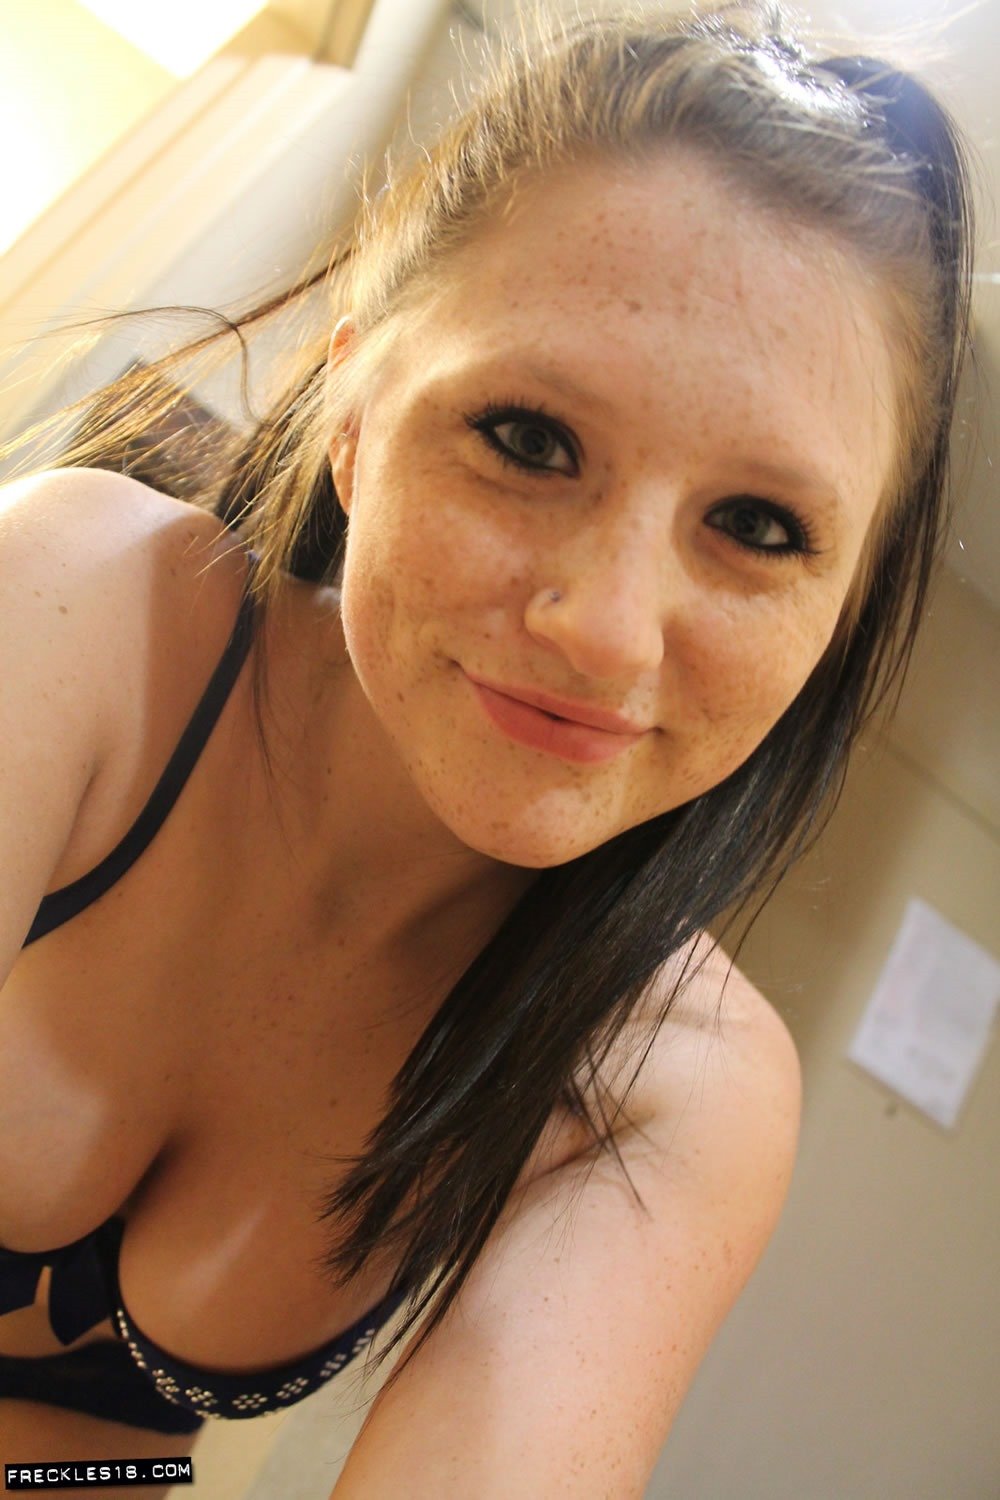 Freckles18 Hot Mirror Selfie Fine Hotties Hot Naked Girls Celebrities And Hd Porn Videos